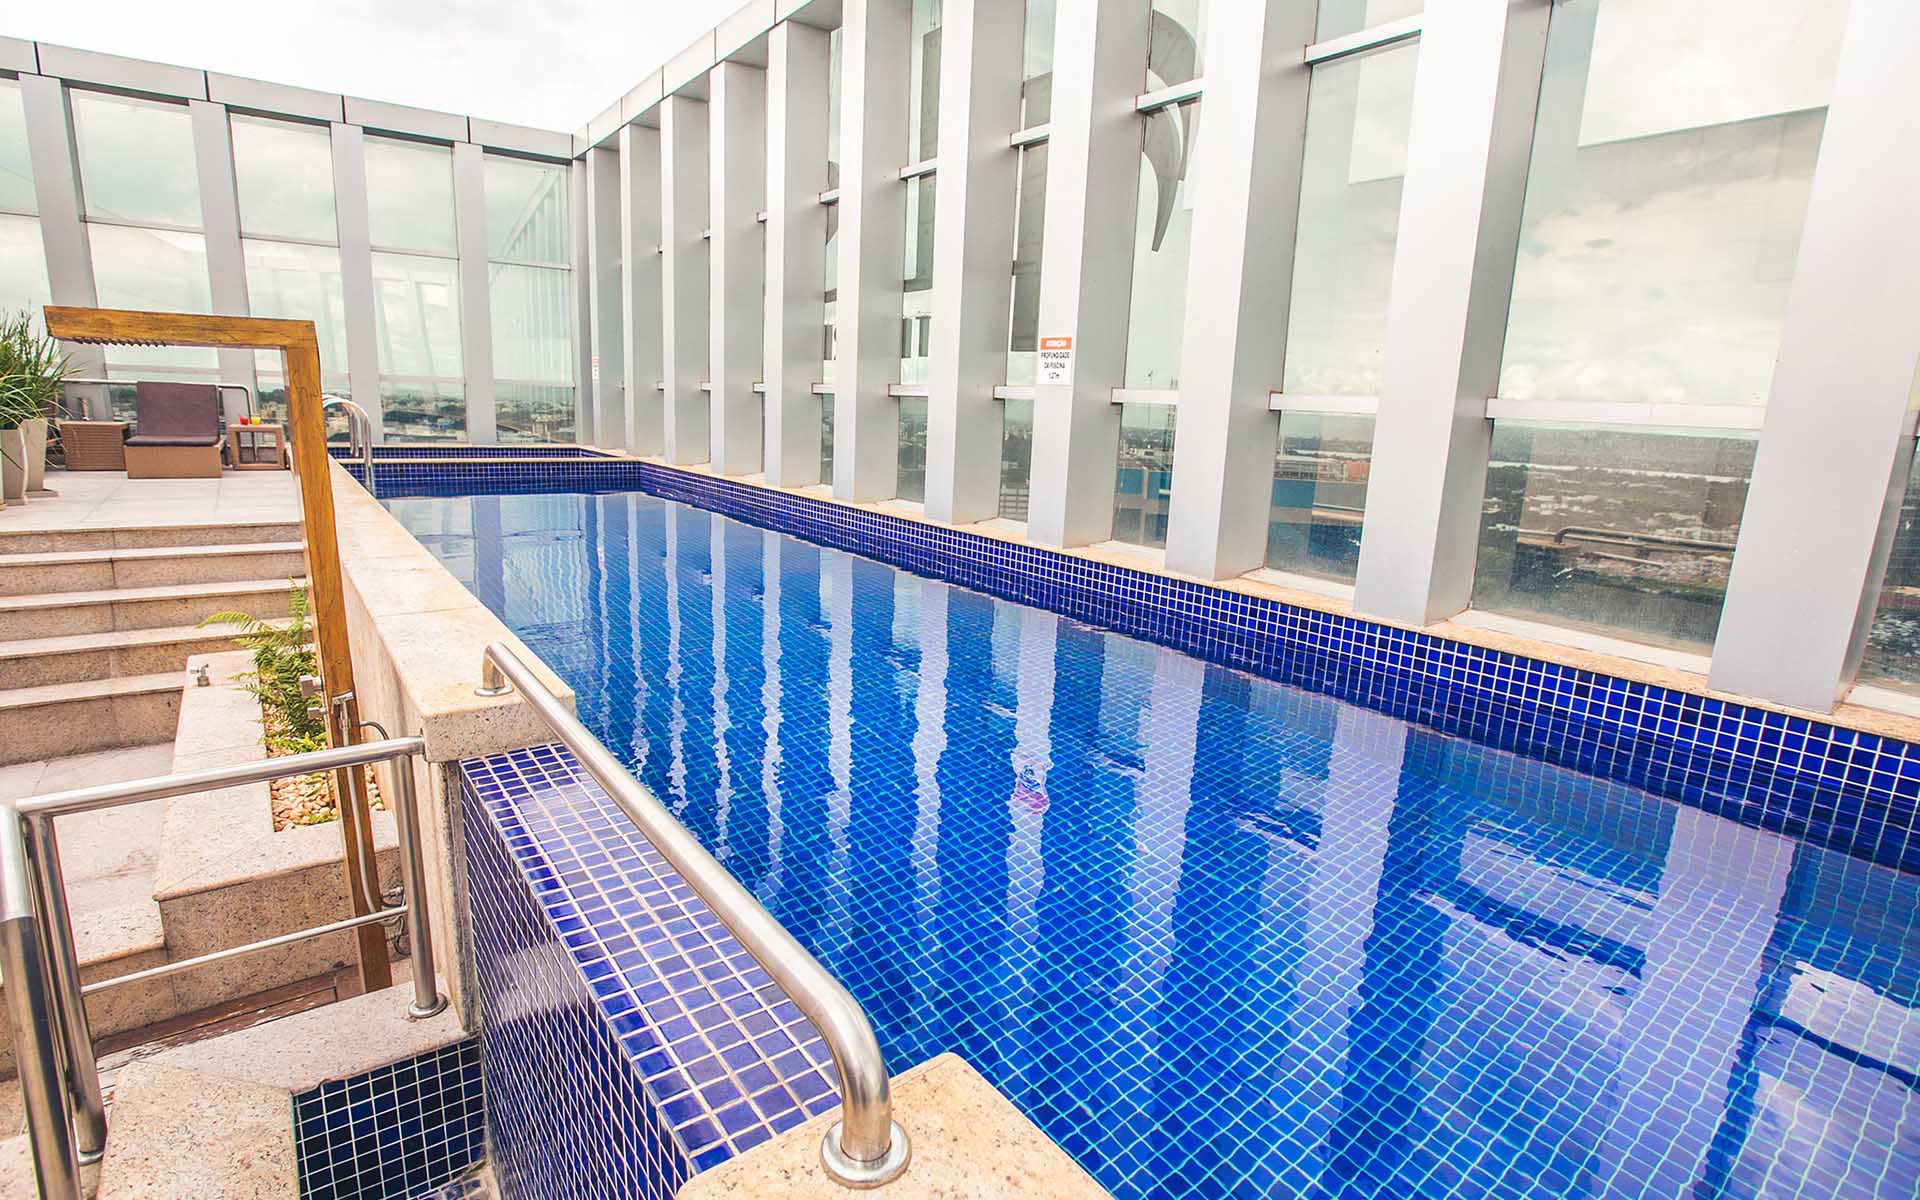 piscina do hotel vision hplus em brasilia